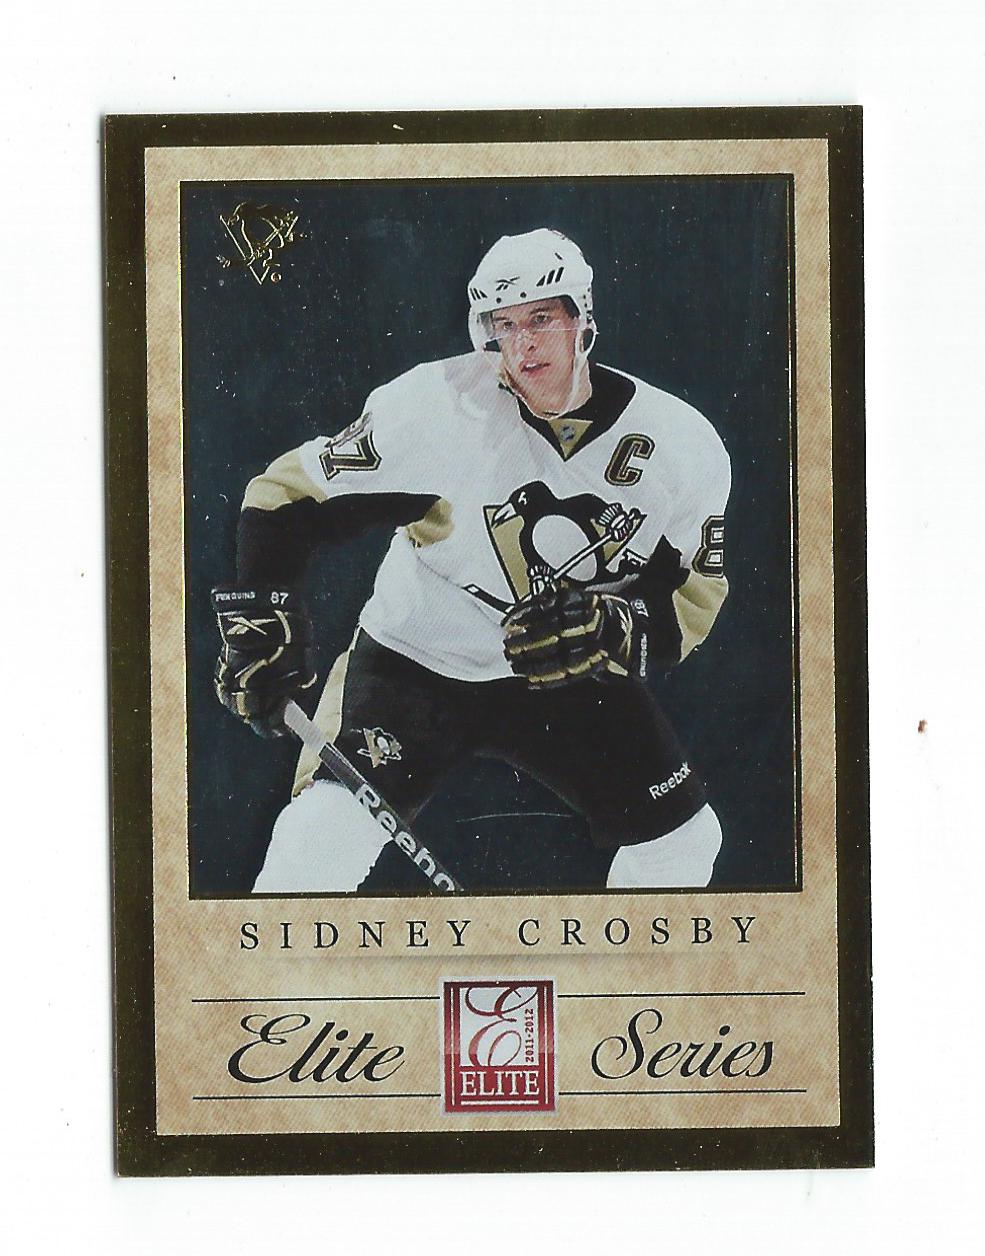 2011-12 Elite Series Sidney Crosby #4 Sidney Crosby